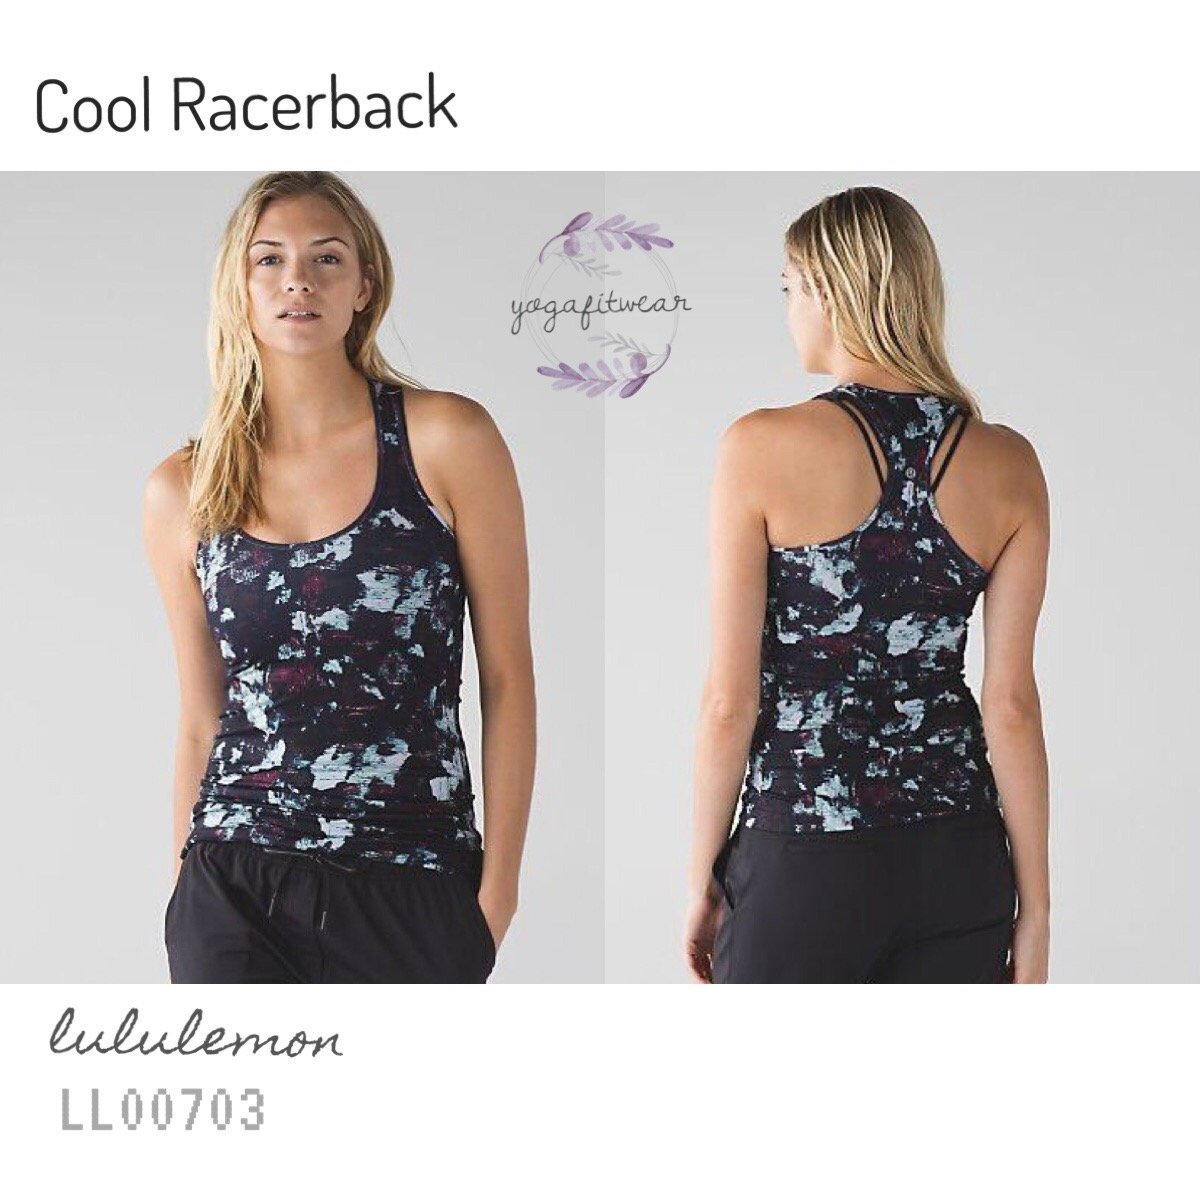 Lululemon - Cool Racerback (Static Blossom multi) (LL00703)